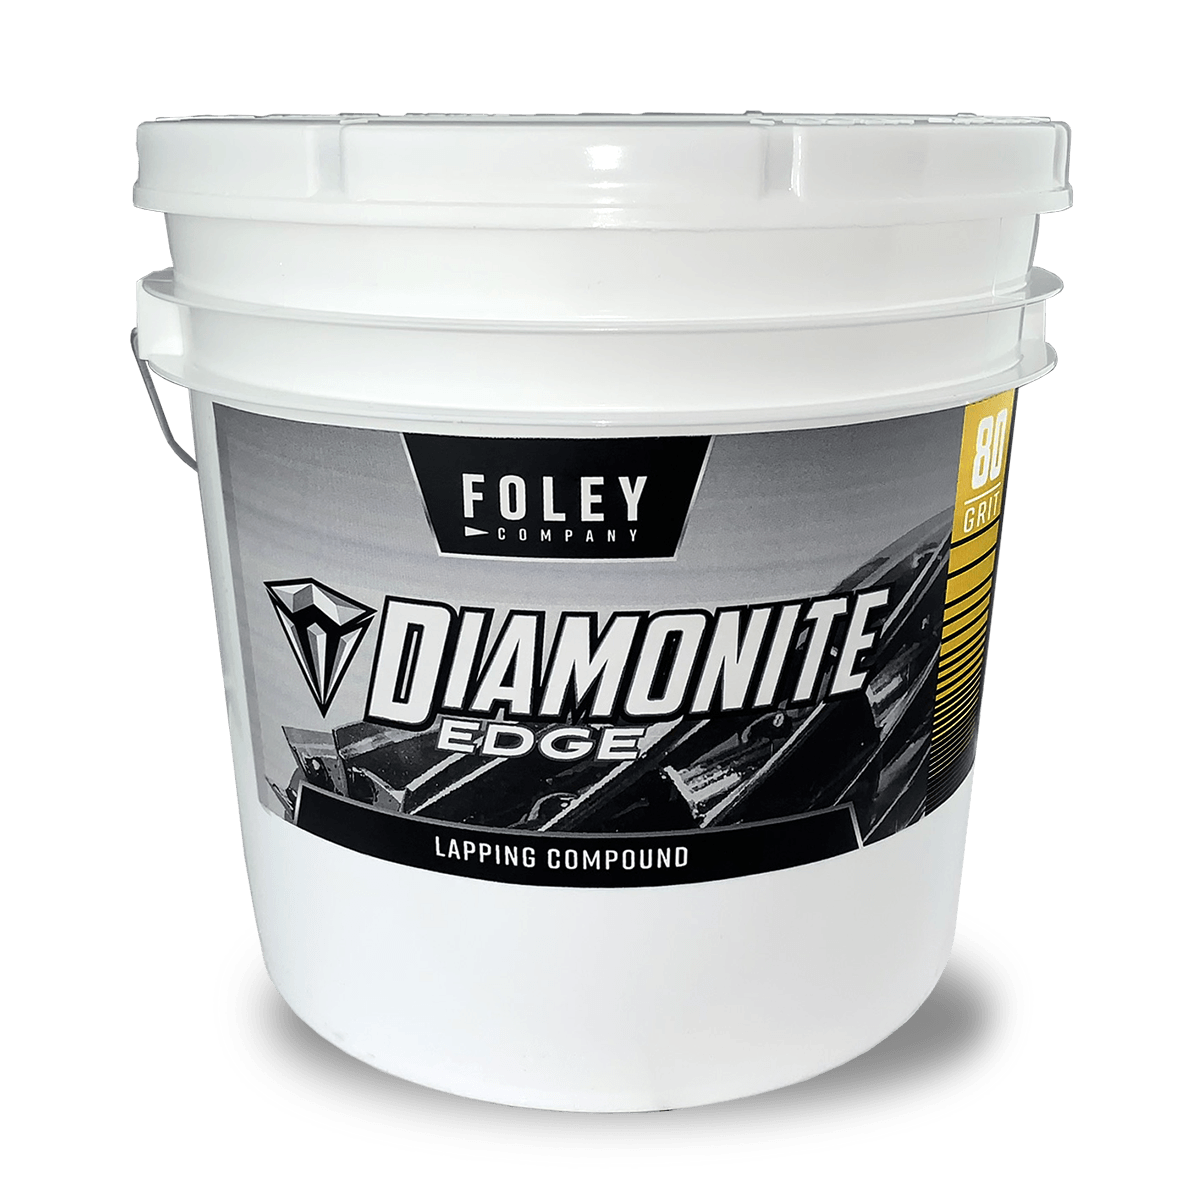 Foley Diamonite Edge Lapping Compound 80 Grit